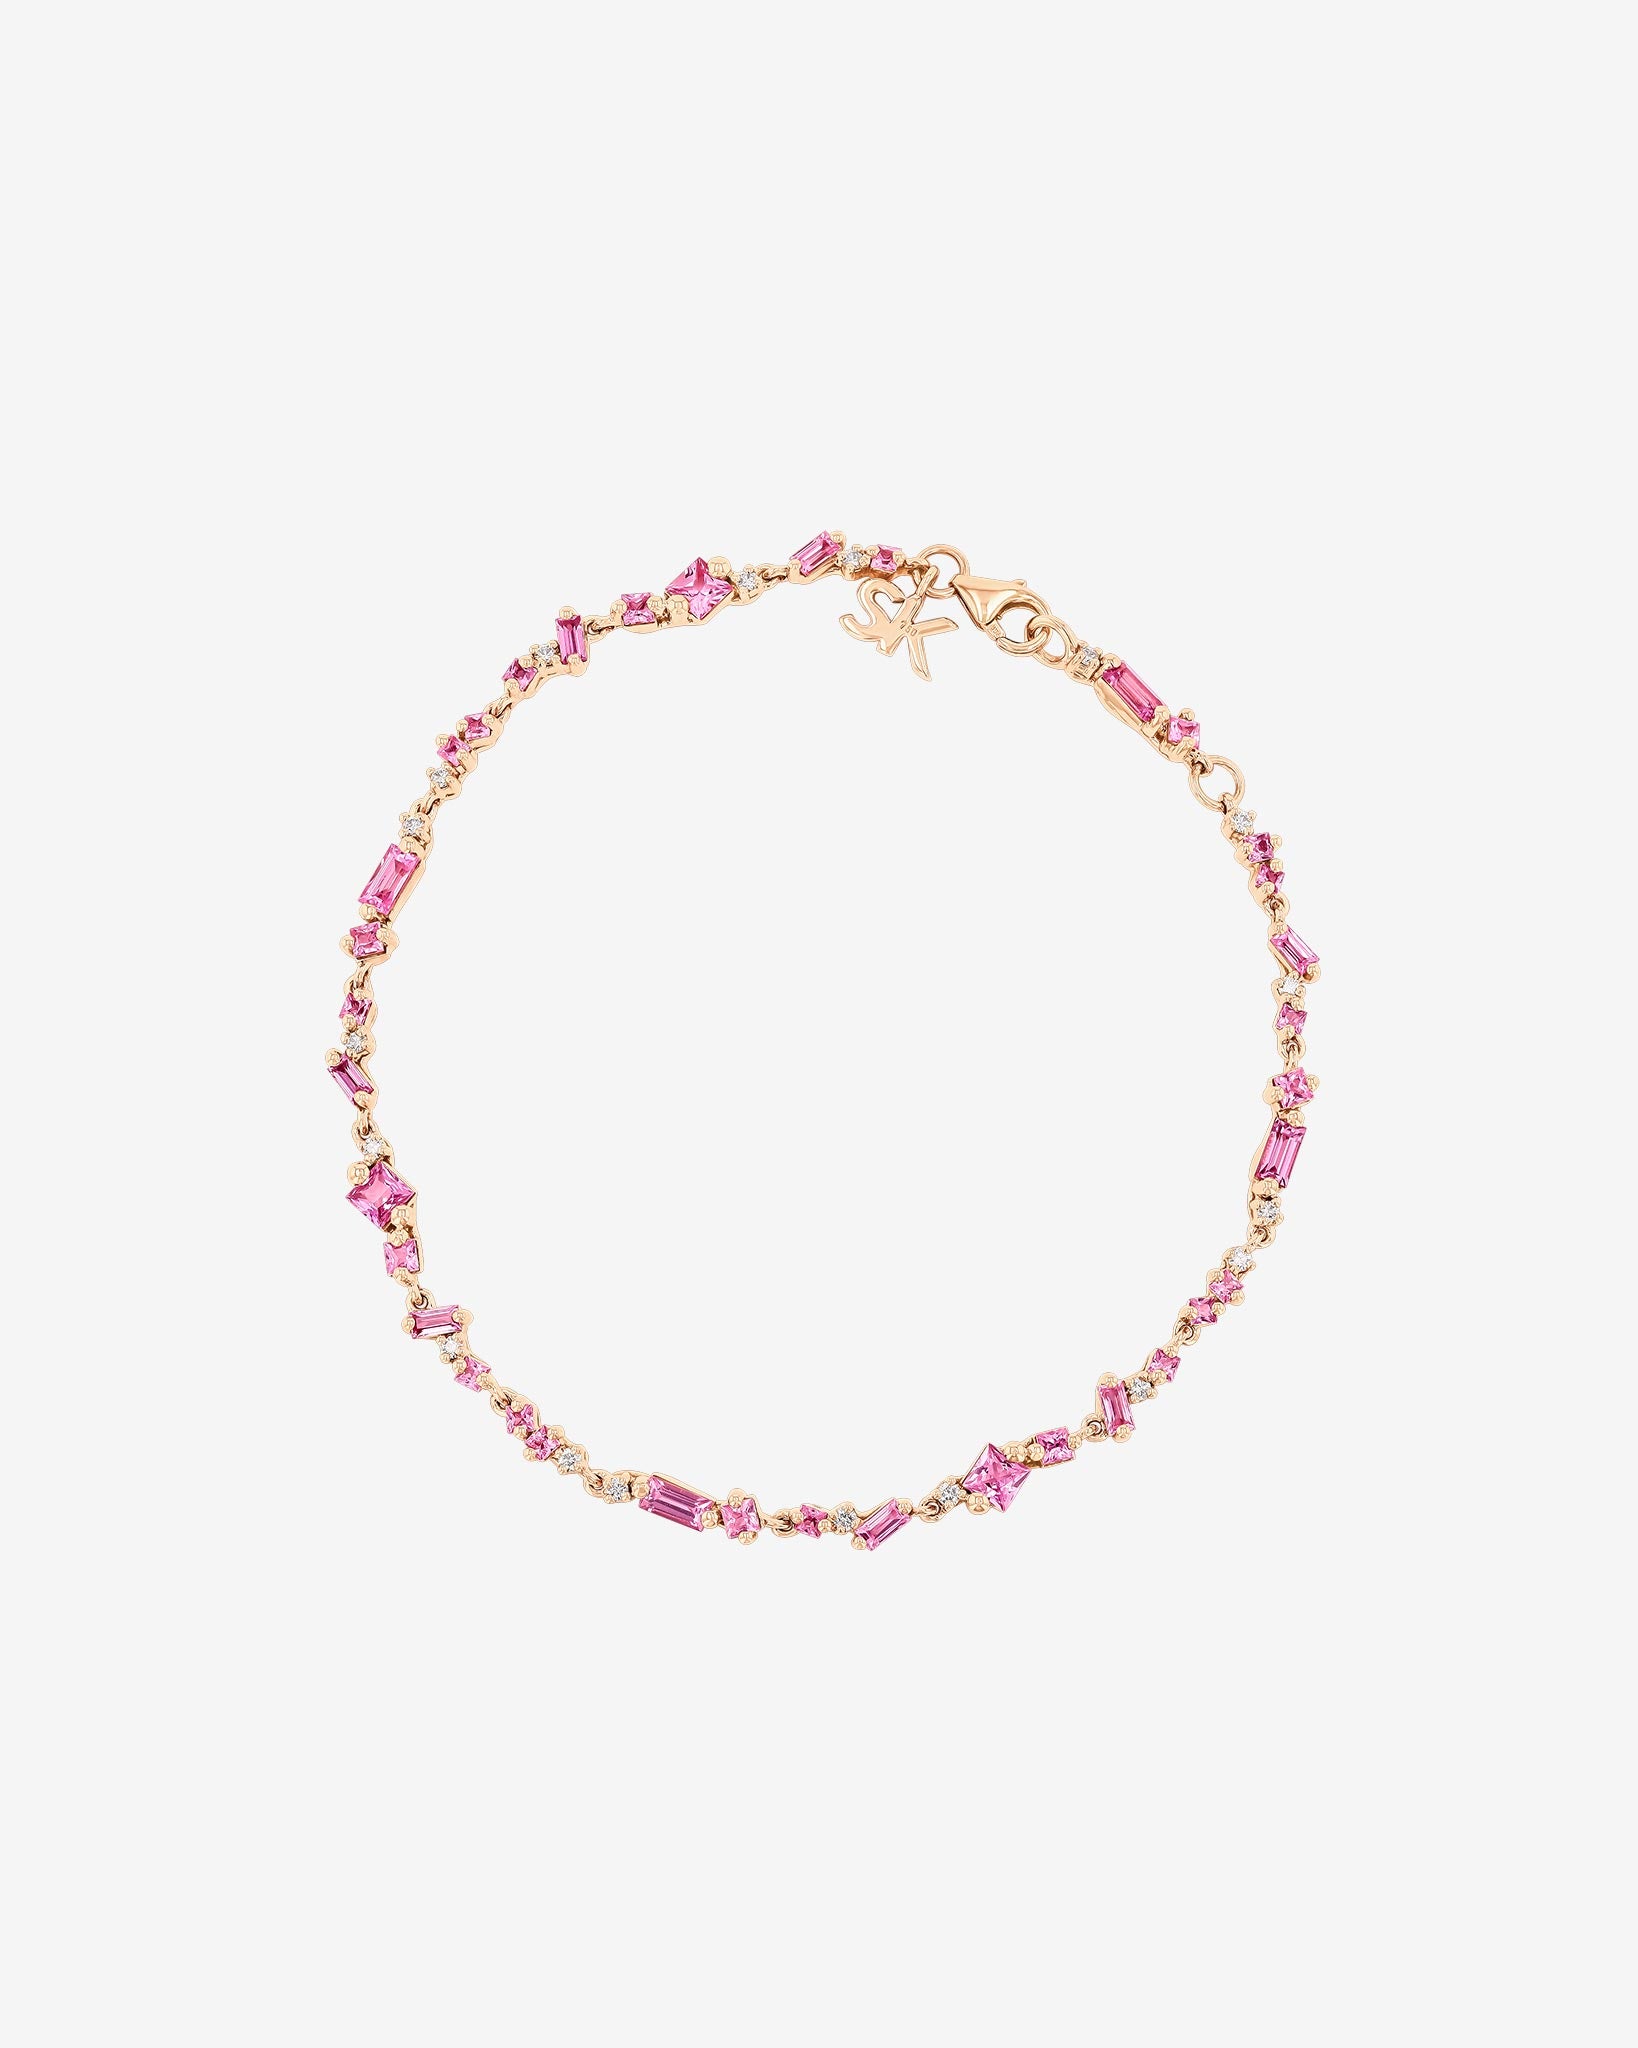 Suzanne Kalan La Fantaisie Star Dust Pink Sapphire Bracelet in 18k rose gold